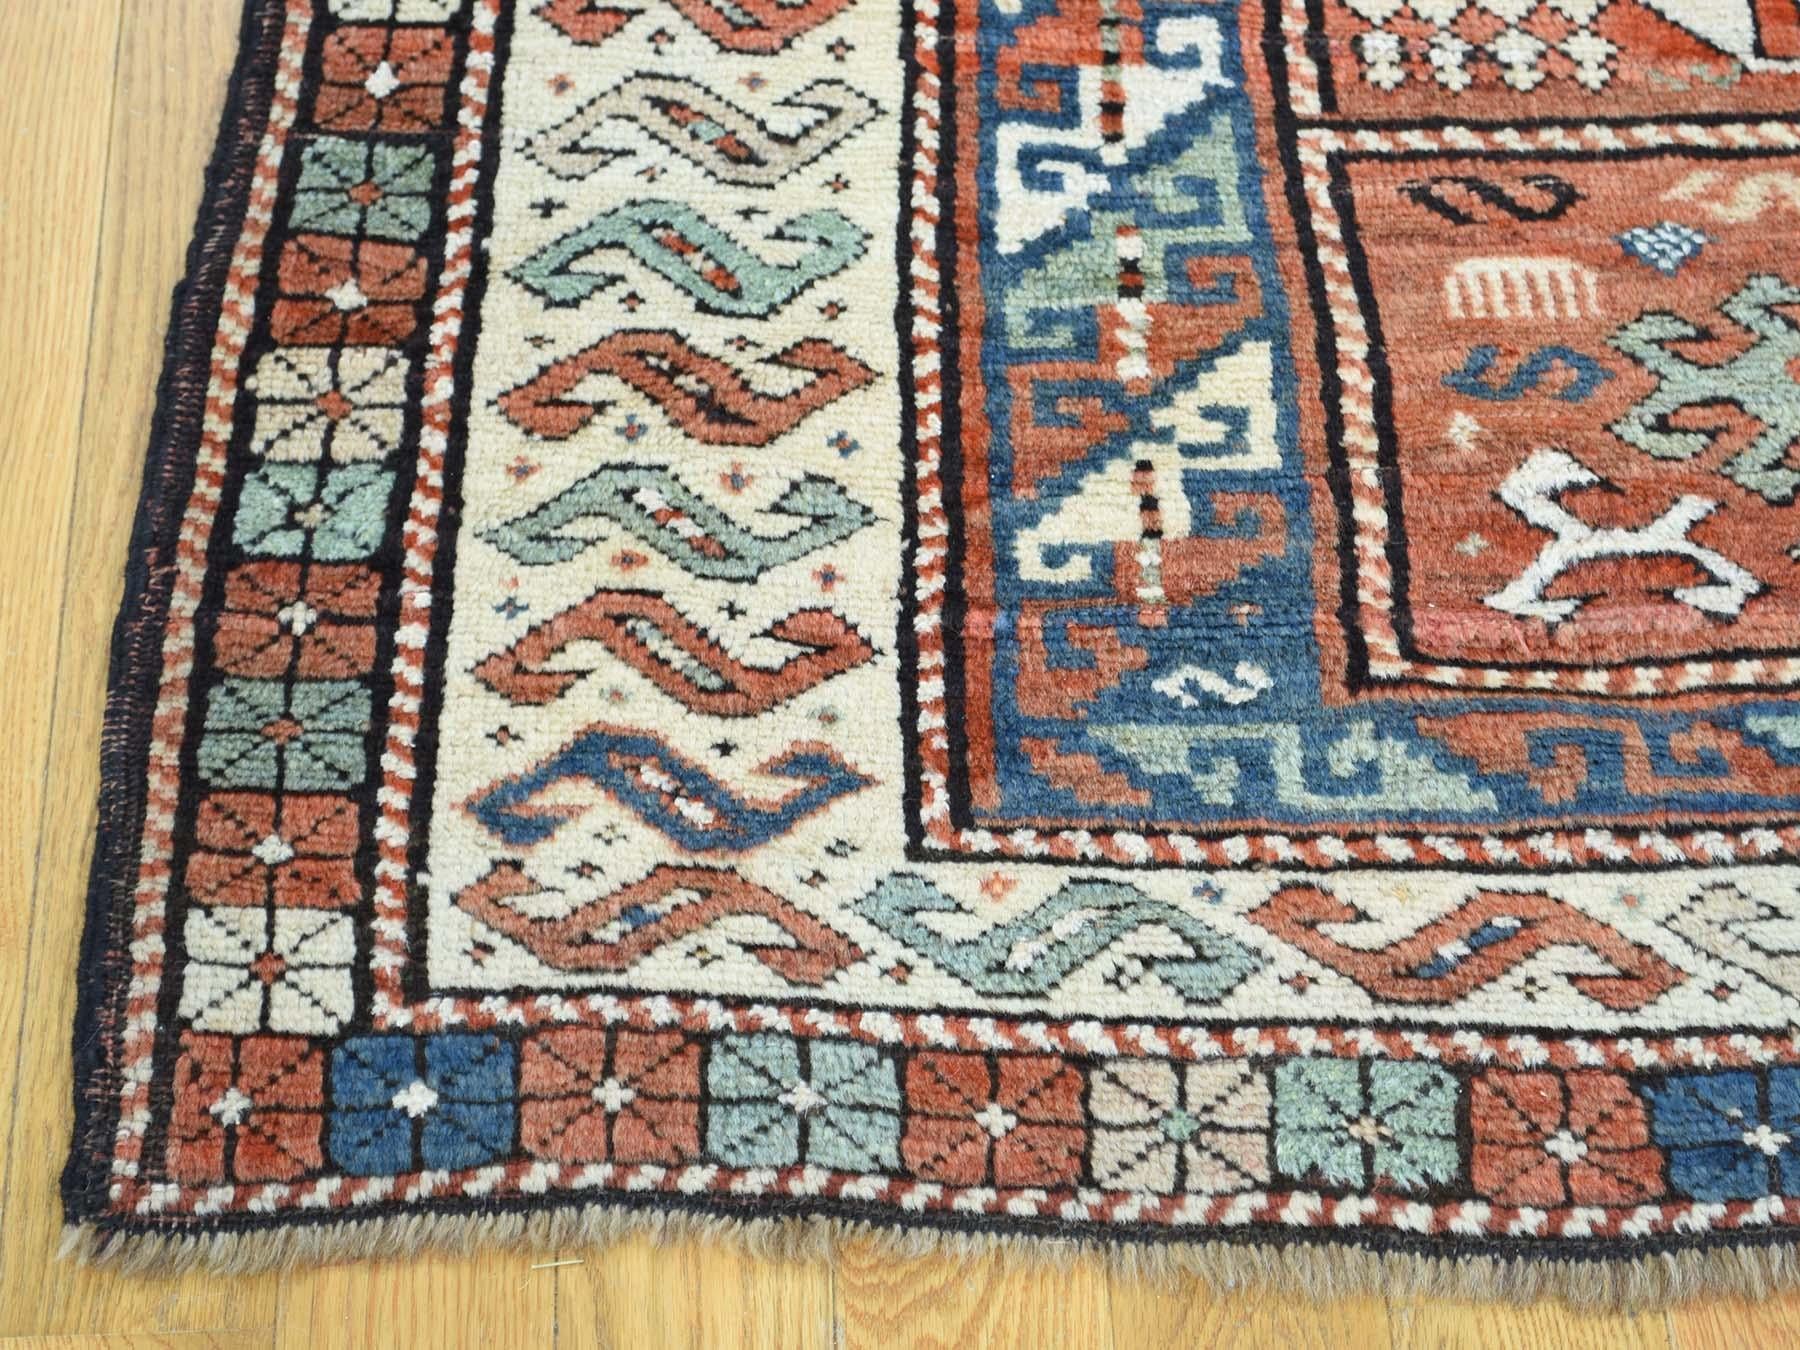 1890 Antique Caucasian Kazak Wide Runner Rug, Clean and Soft Pile 5